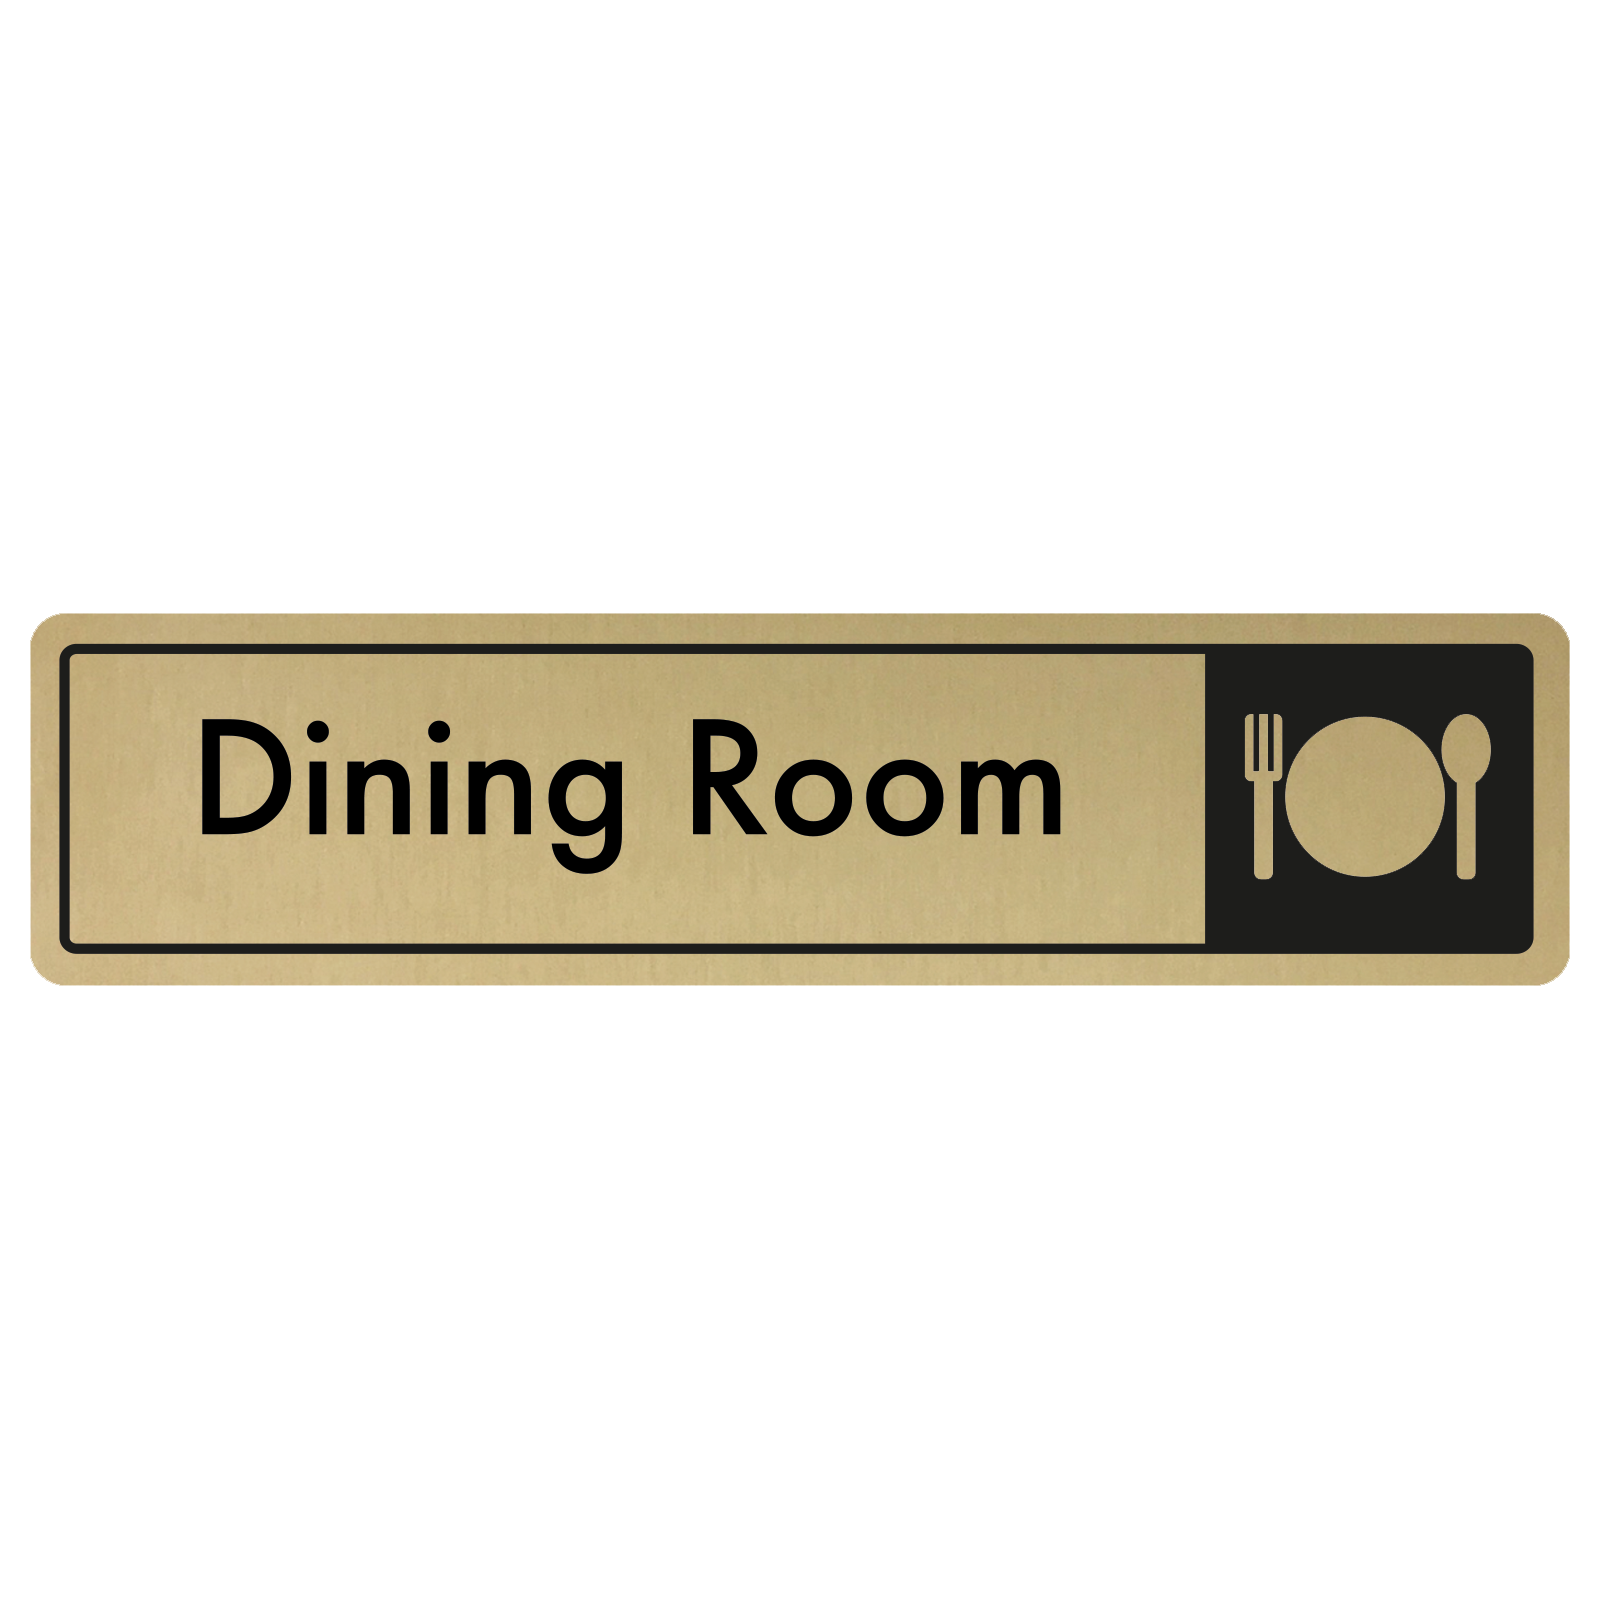 Dining Room Door Sign - Black on Gold